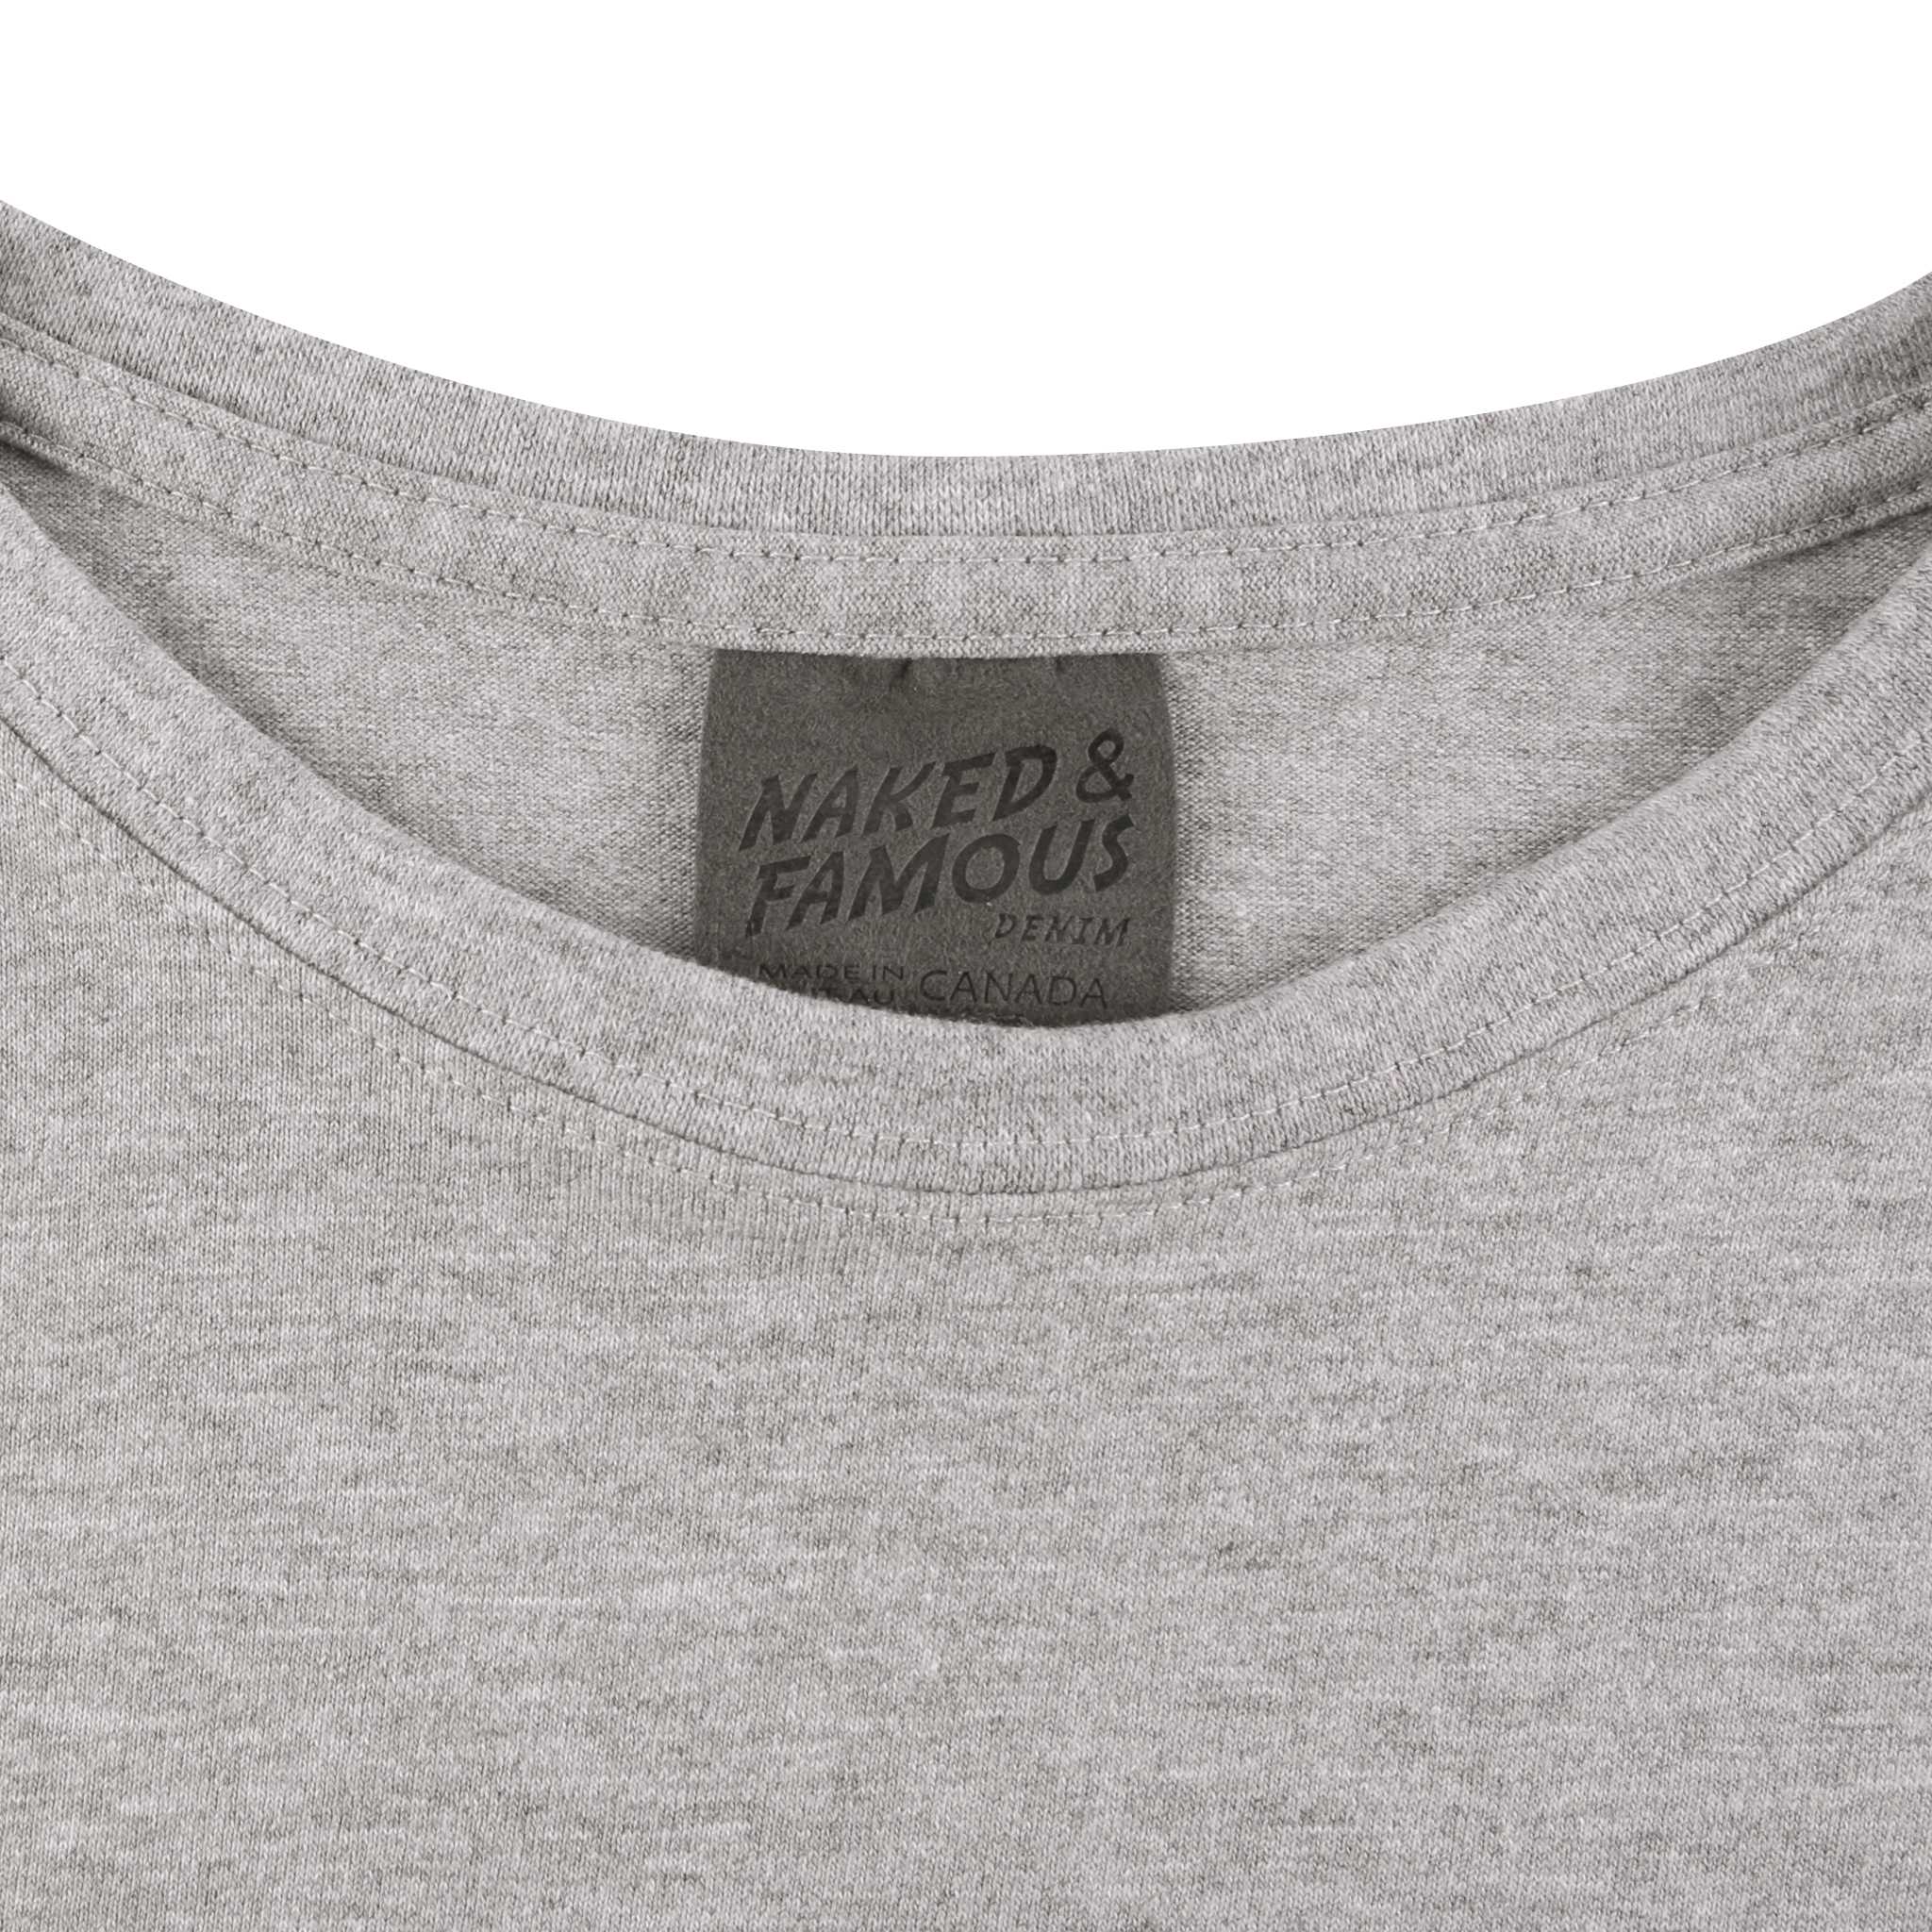 Nakedshirt Women's Loose T-Shirt Fashion Fit profond col rond plus dos coton 